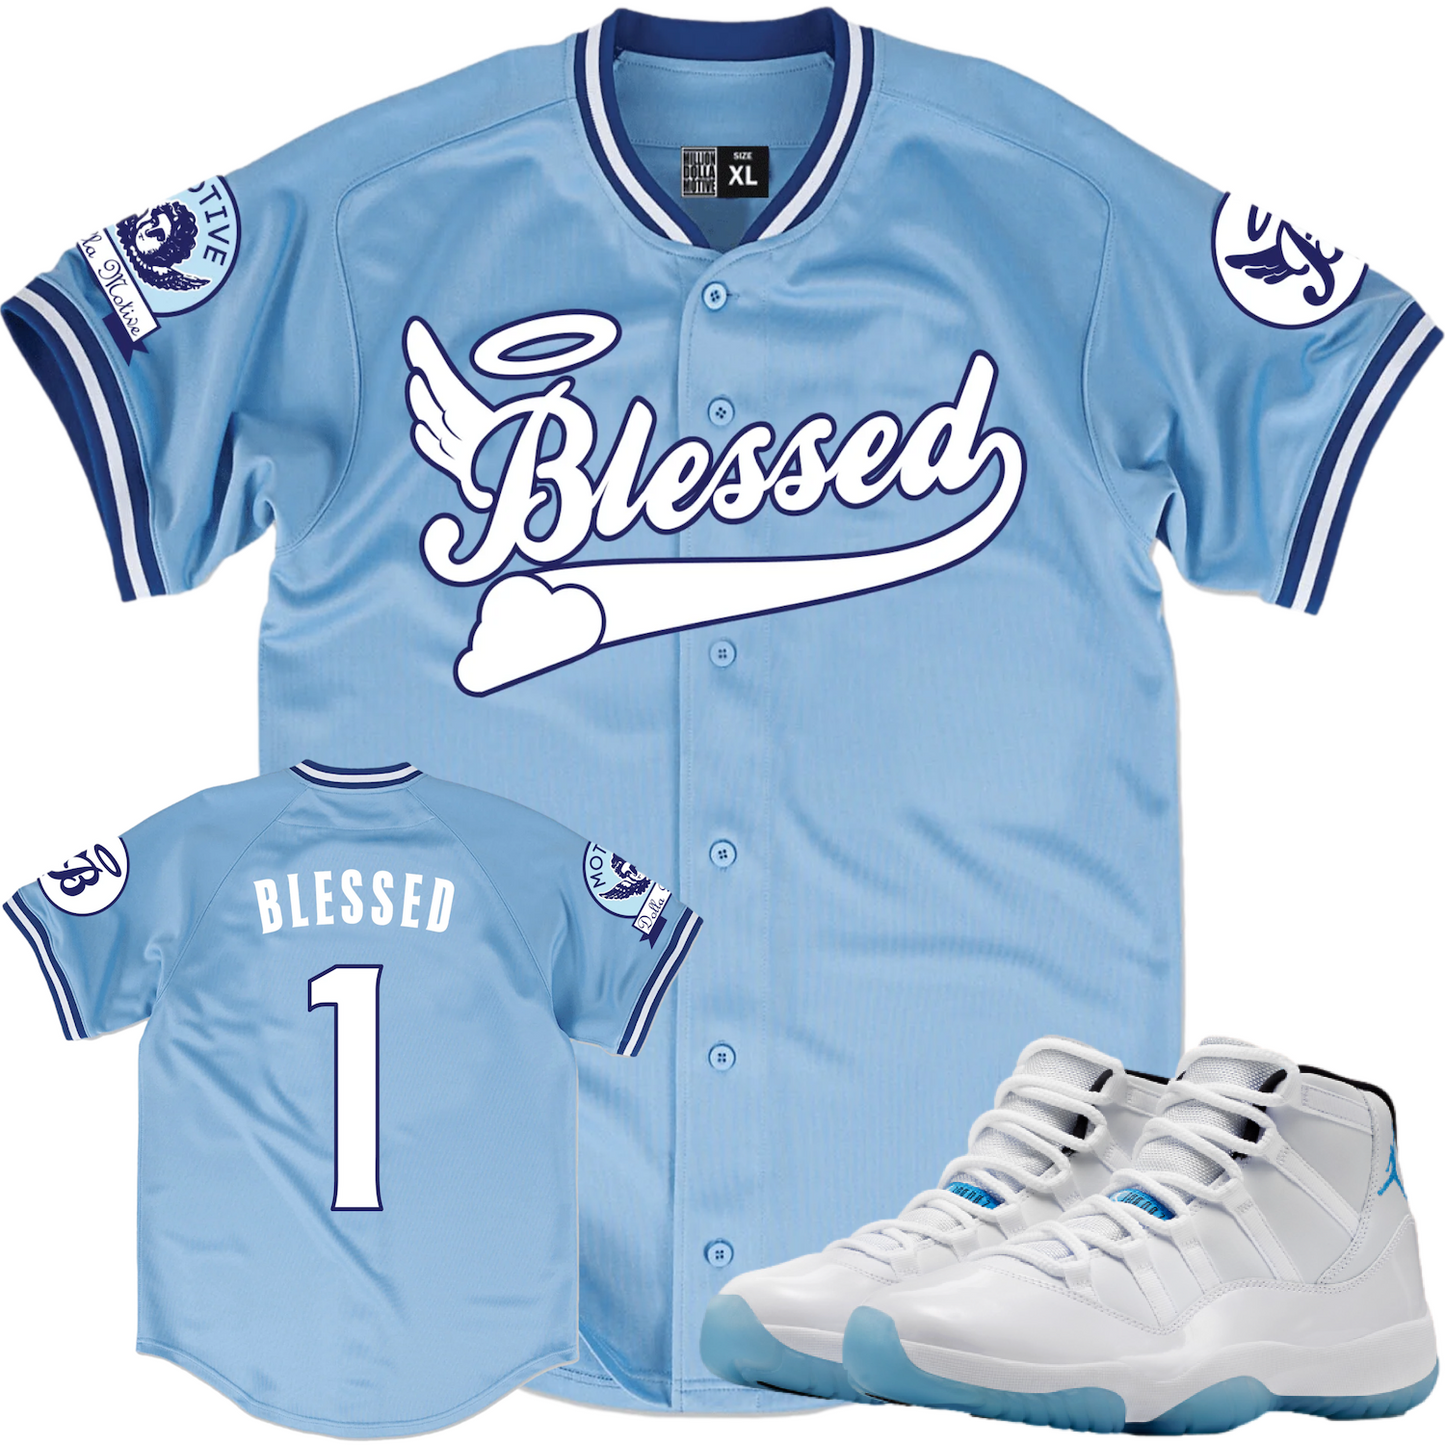 Jordan 11 Columbia Legend Blue 11s Baseball Jersey - BLESSED